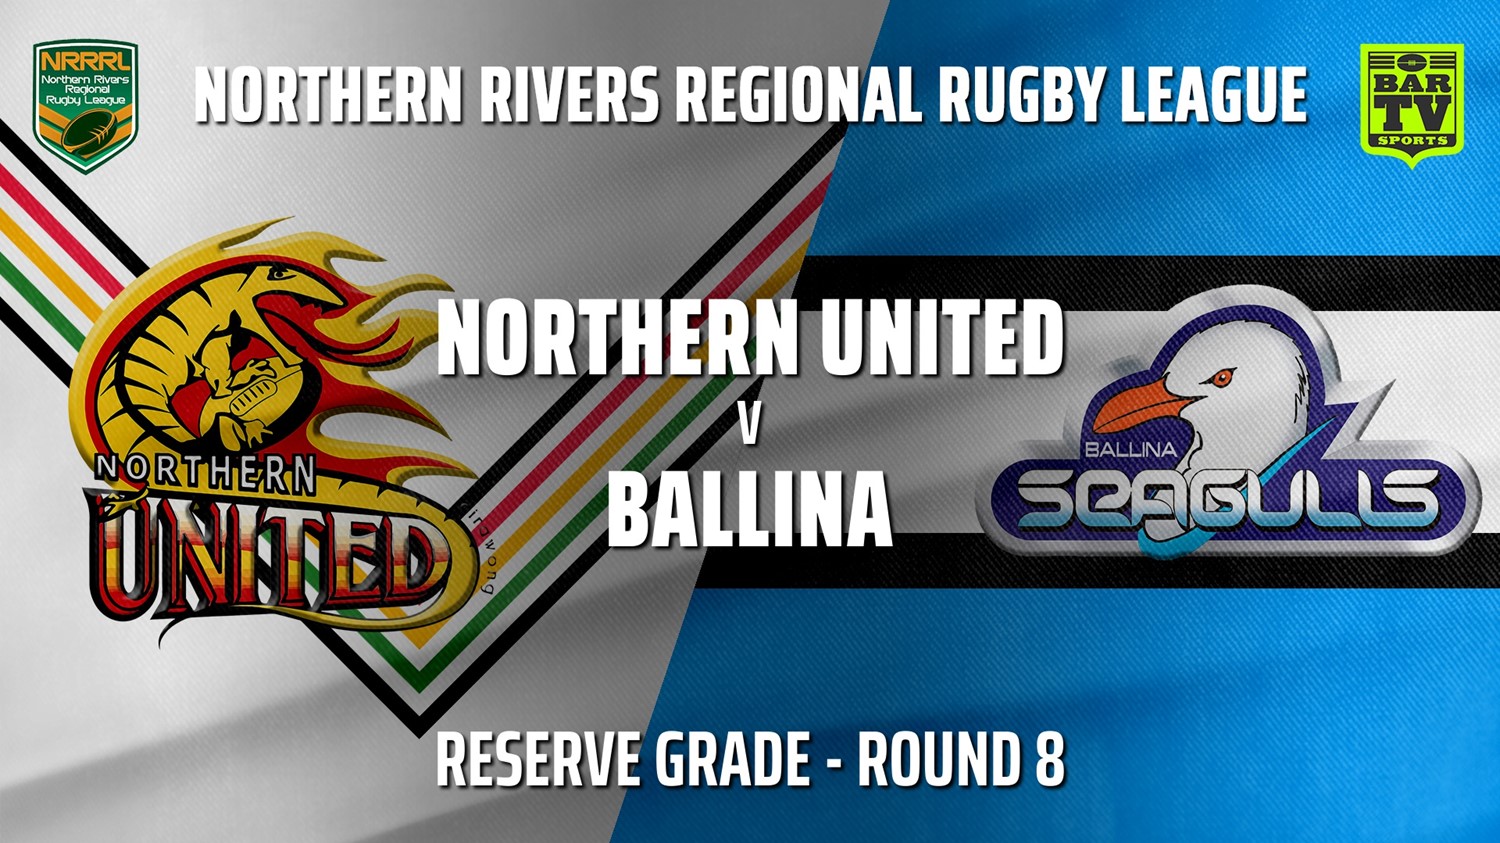 210627-Northern Rivers Round 8 - Reserve Grade - Northern United v Ballina Seagulls Slate Image